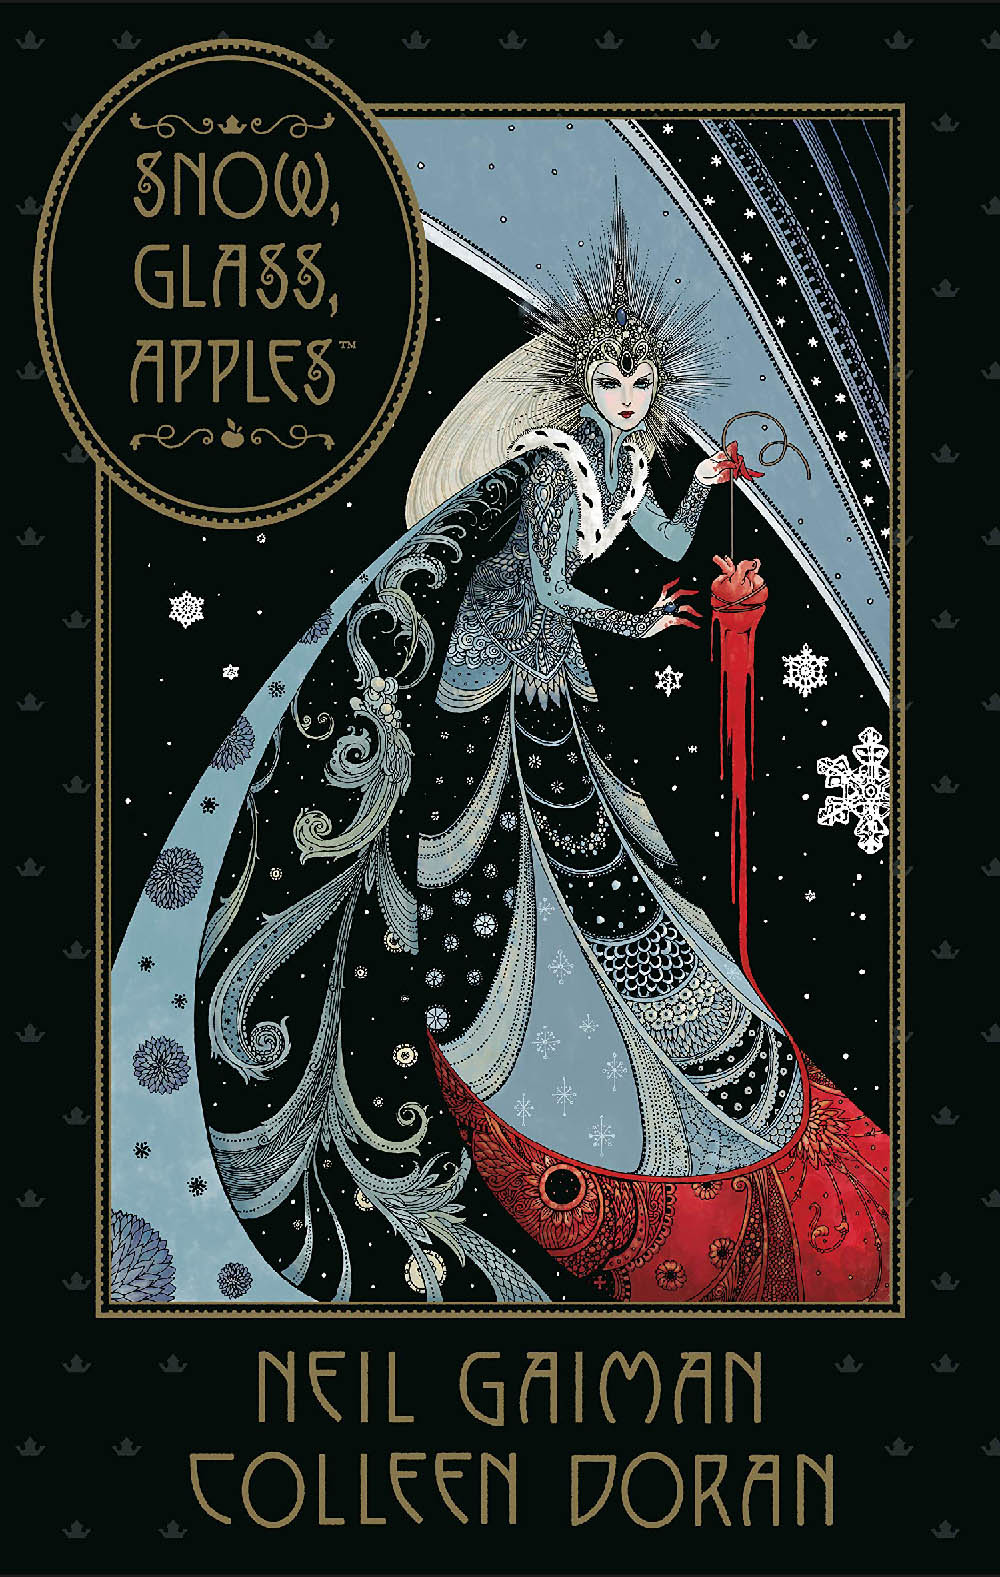 Neil Gaiman's Snow, Glass, Apples Trade Hardcover